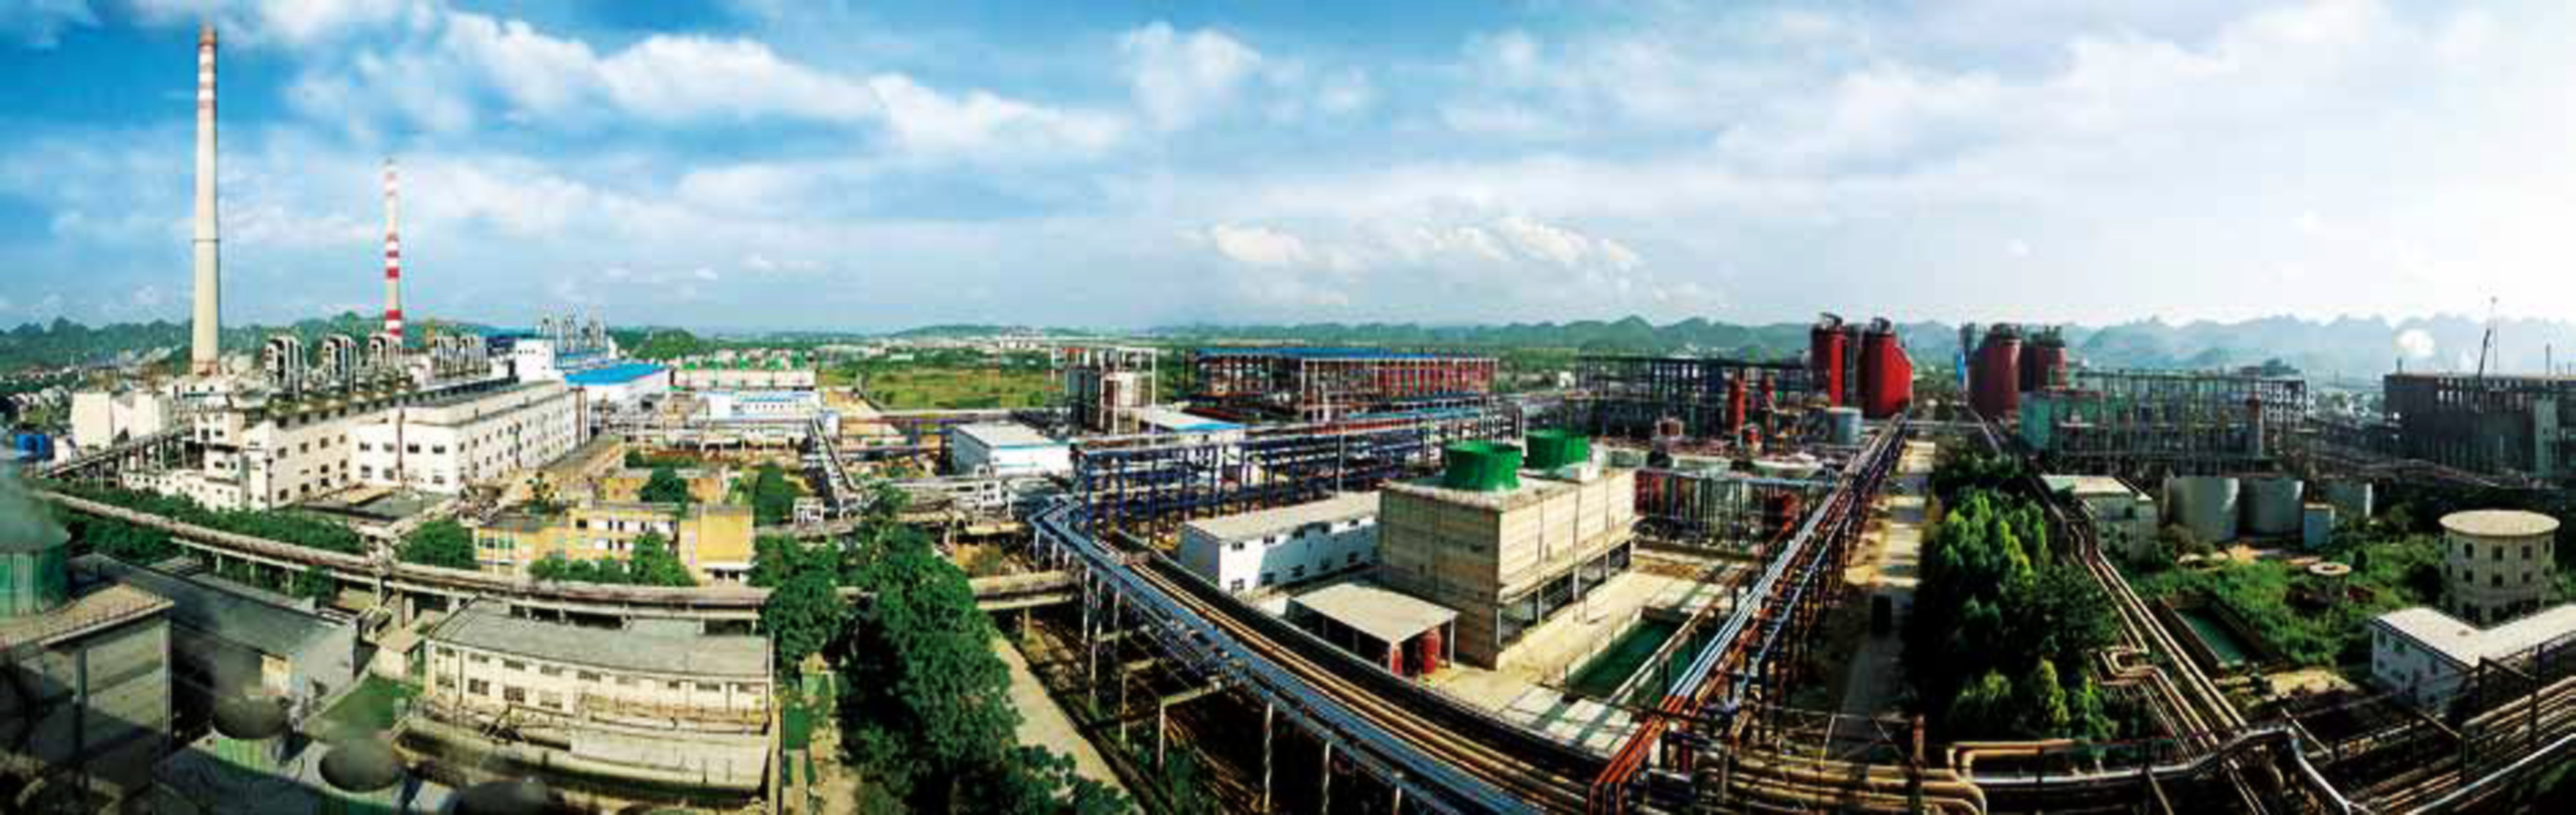 Chinalco Ningxia Thermal Power Co. Ltd